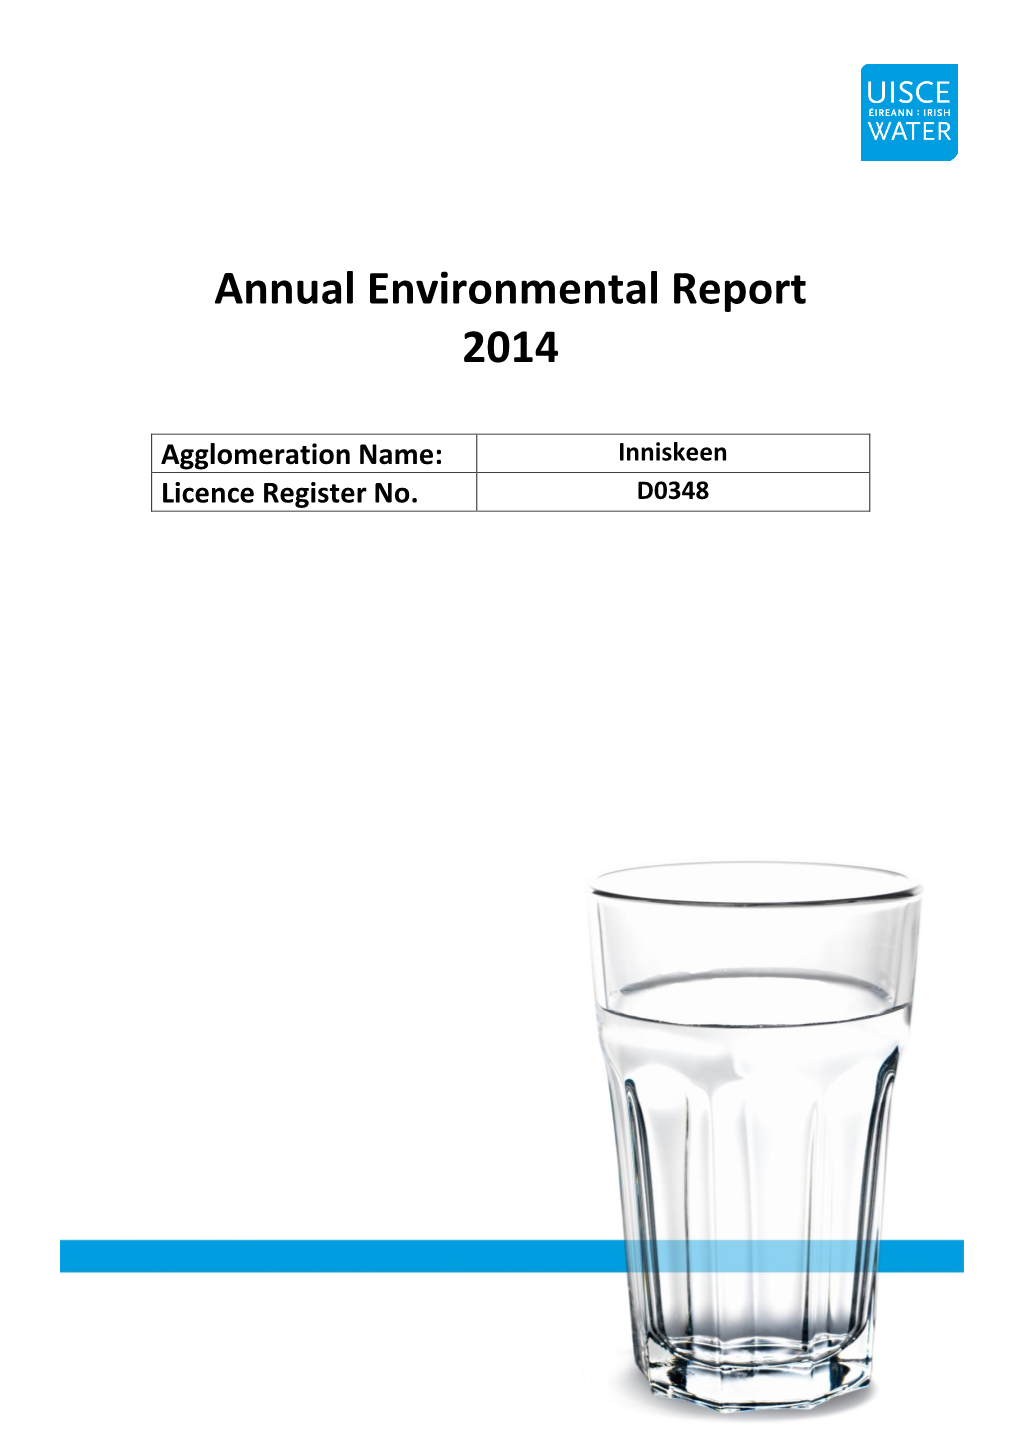 Annual Environmental Report 2014